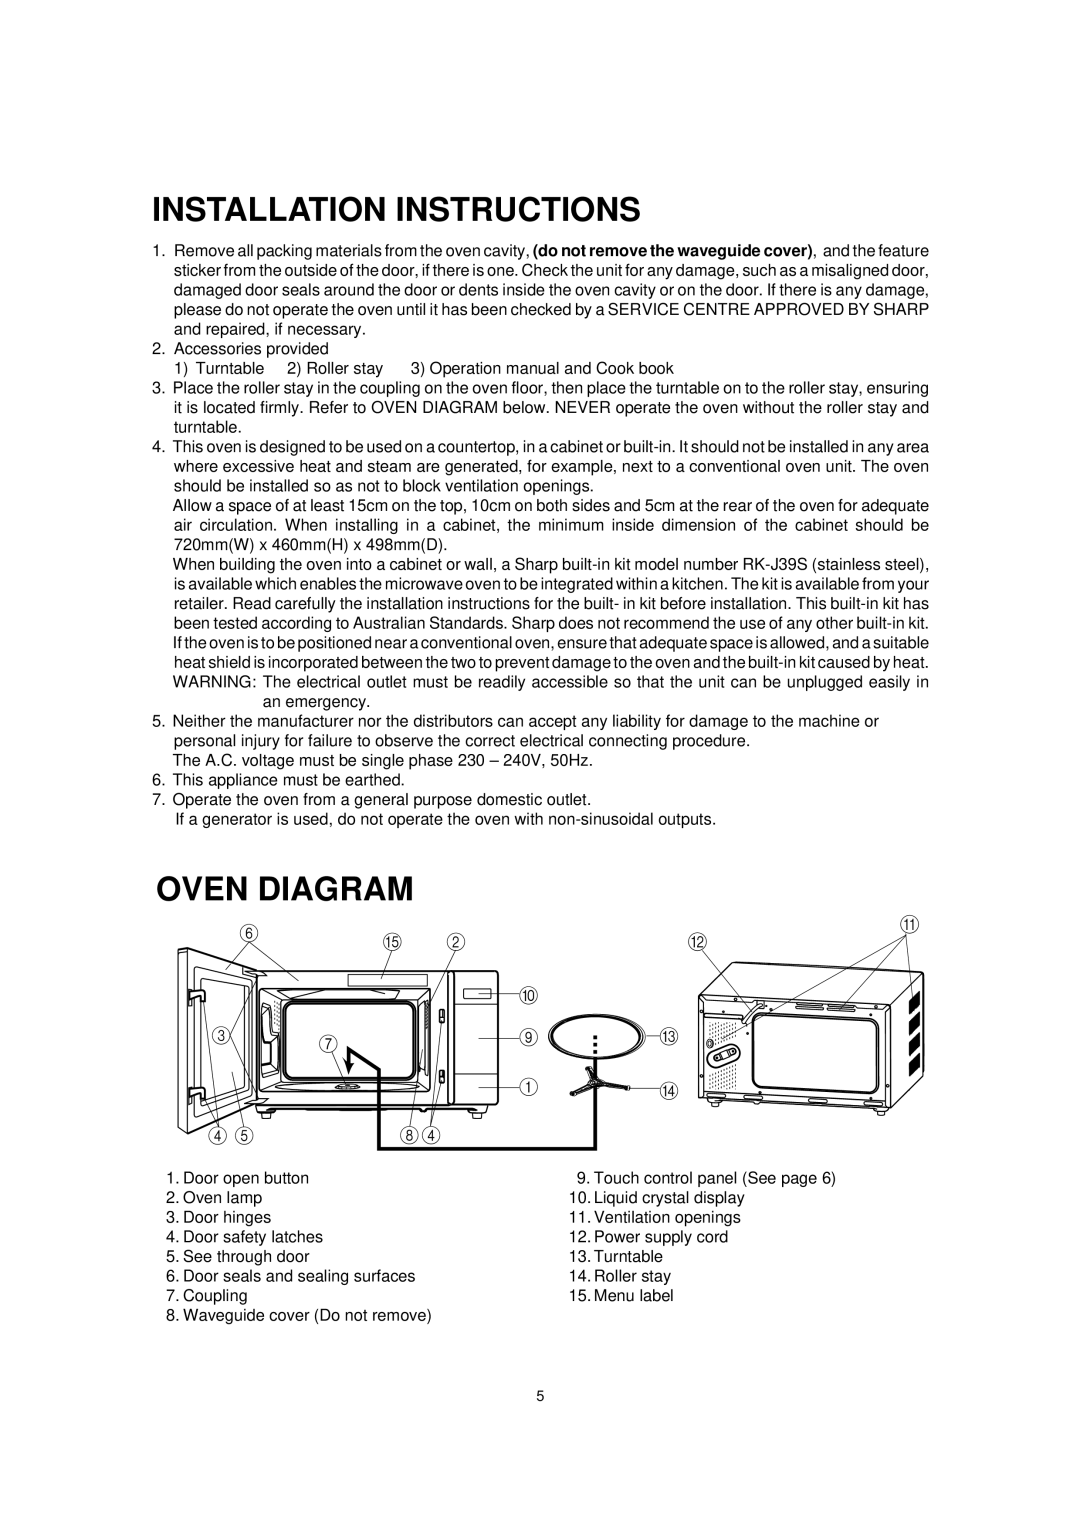 Sharp R395Y O/M, R-395Y(S) operation manual Installation Instructions, Oven Diagram 